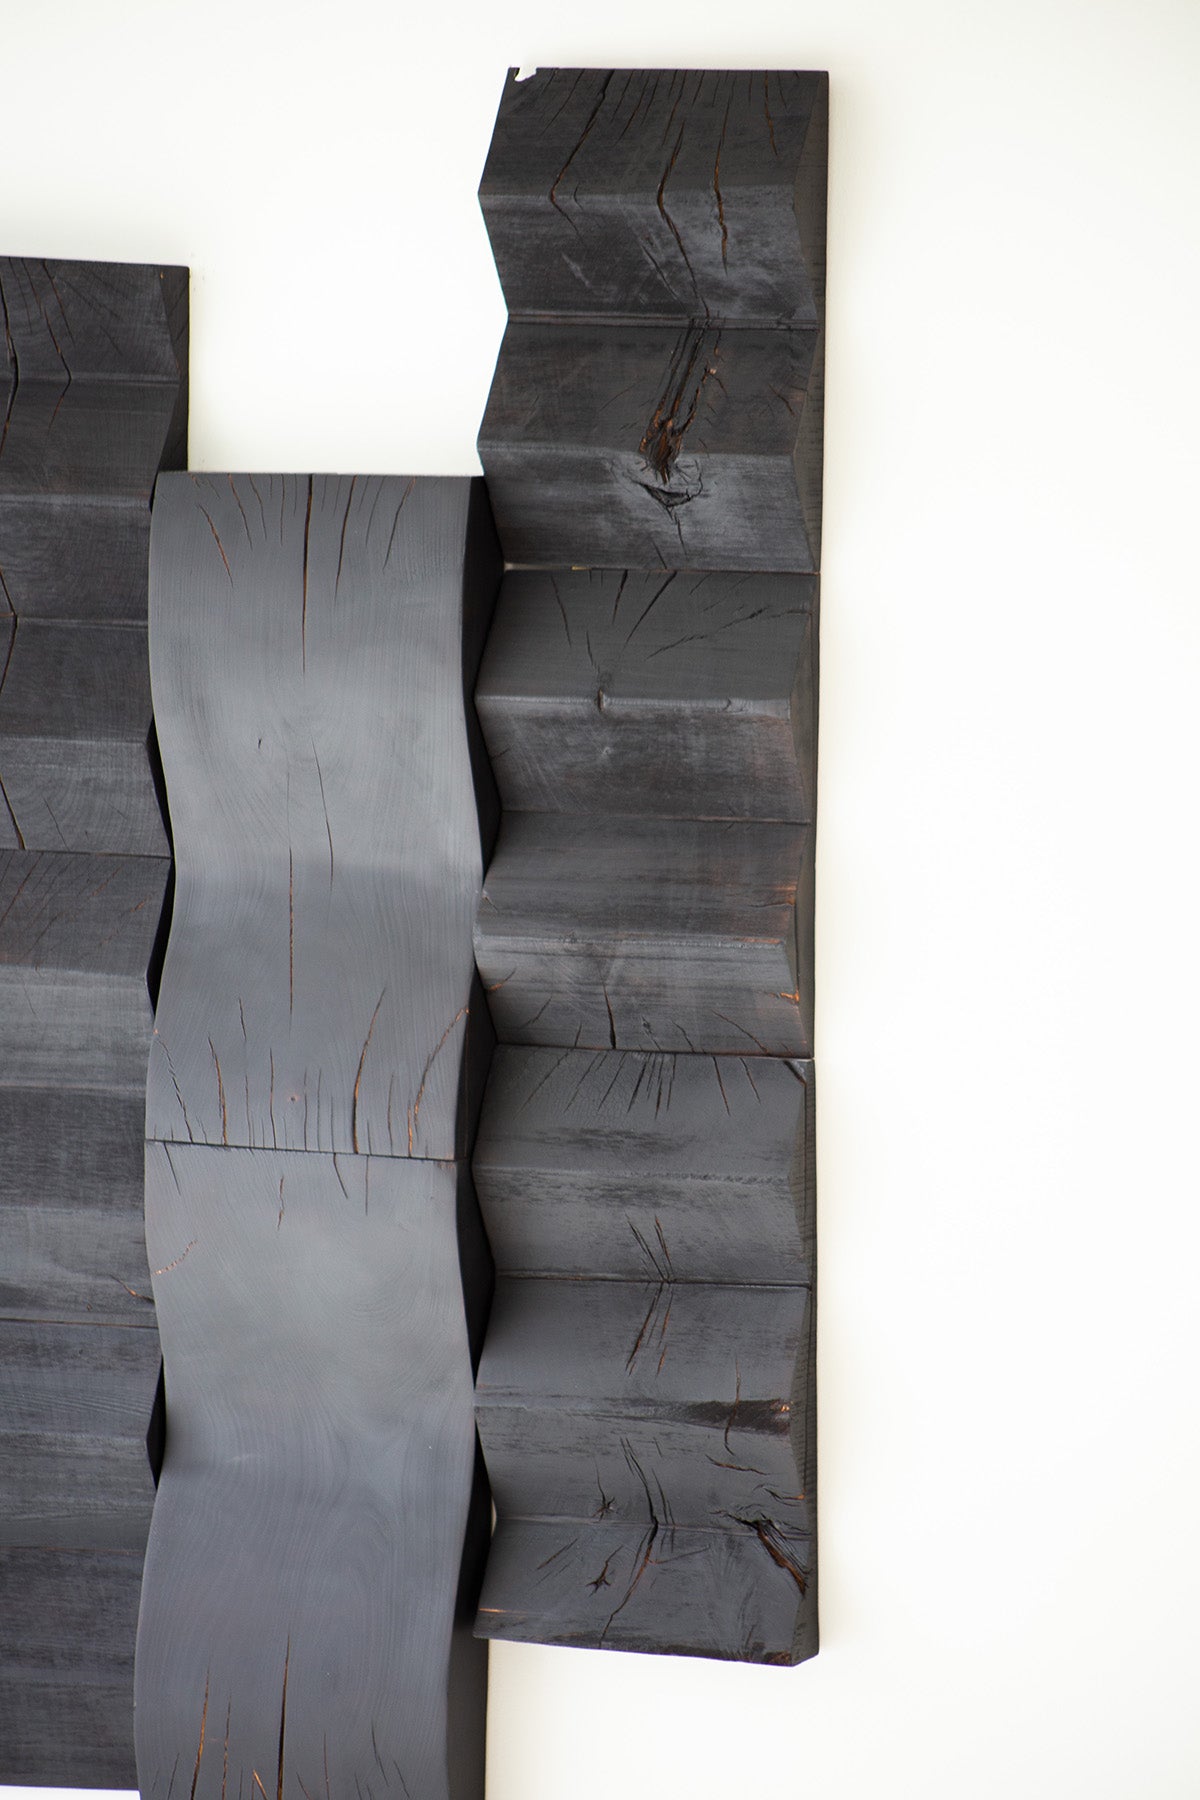 Shou Sugi Ban Wood Wall Panels - Peaks and Waves - 5322